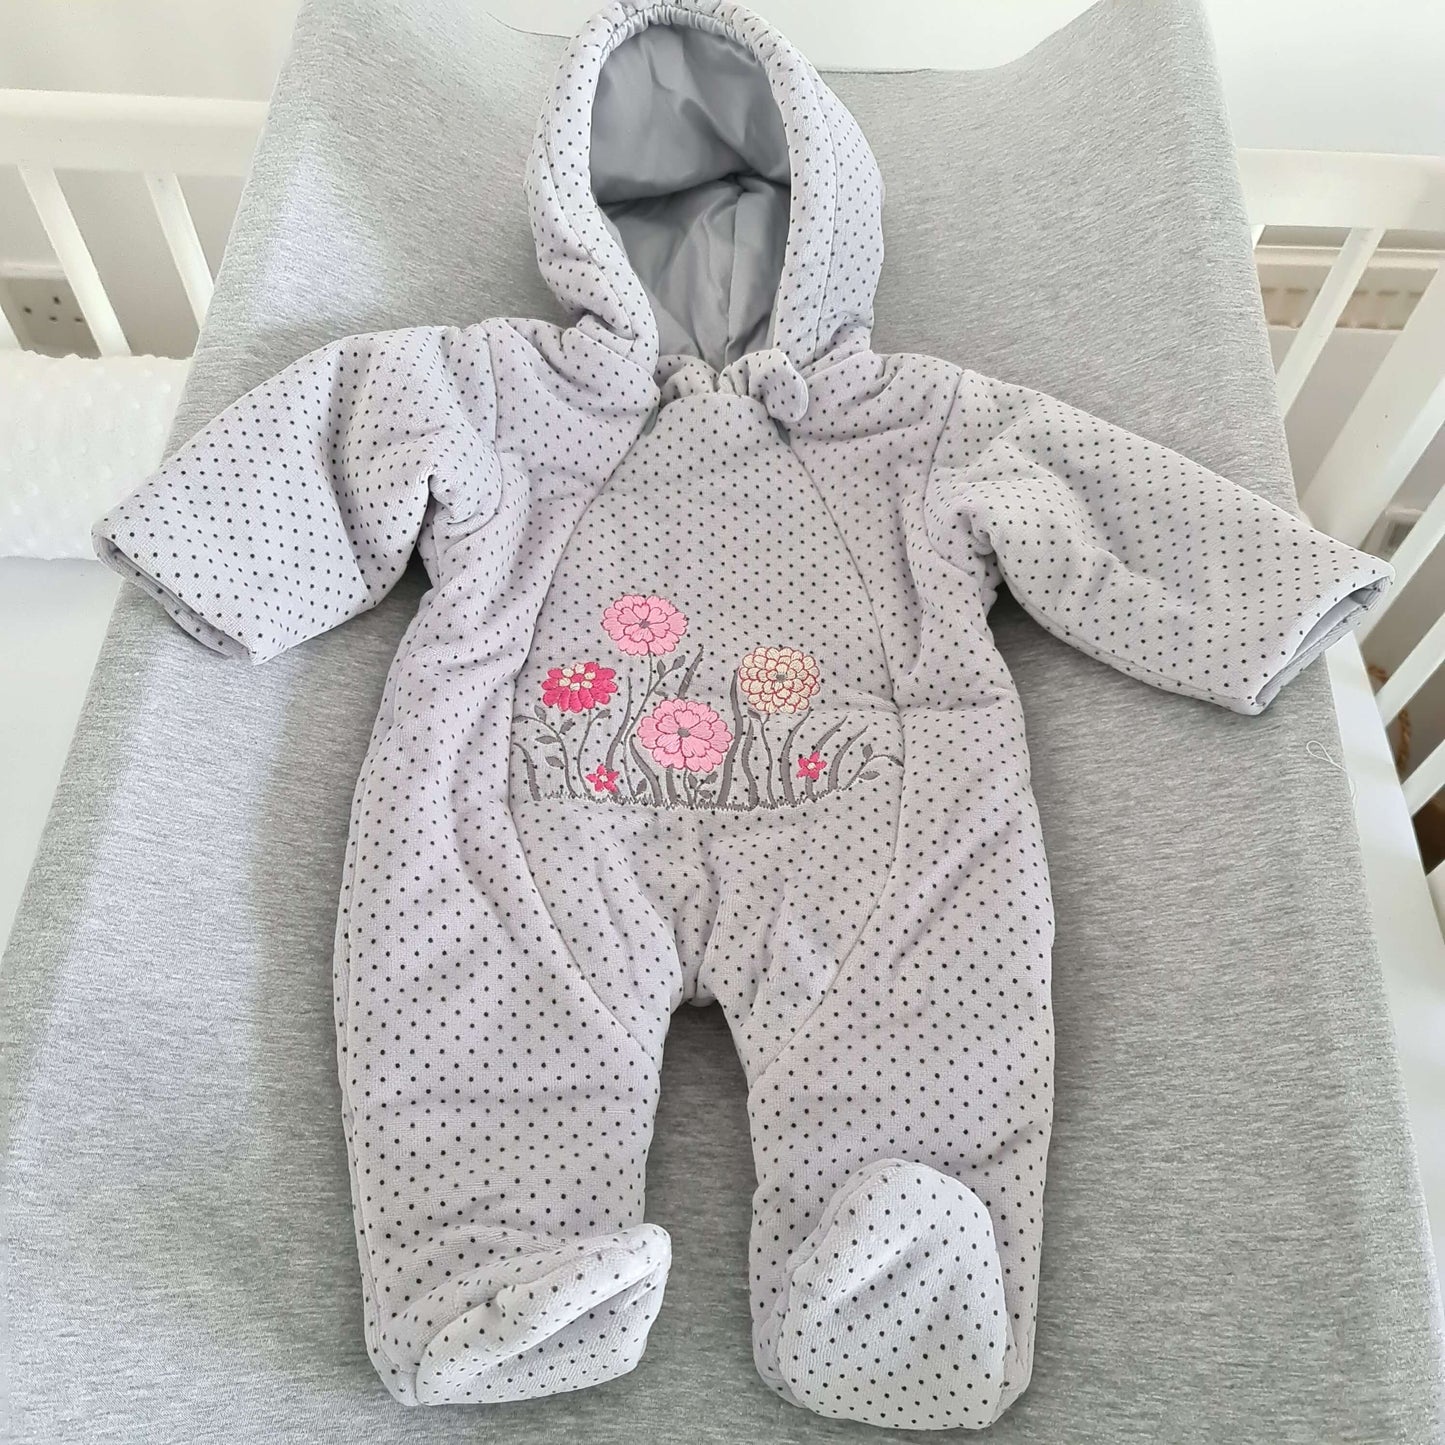 cosy infants warm winter suit for pram grey